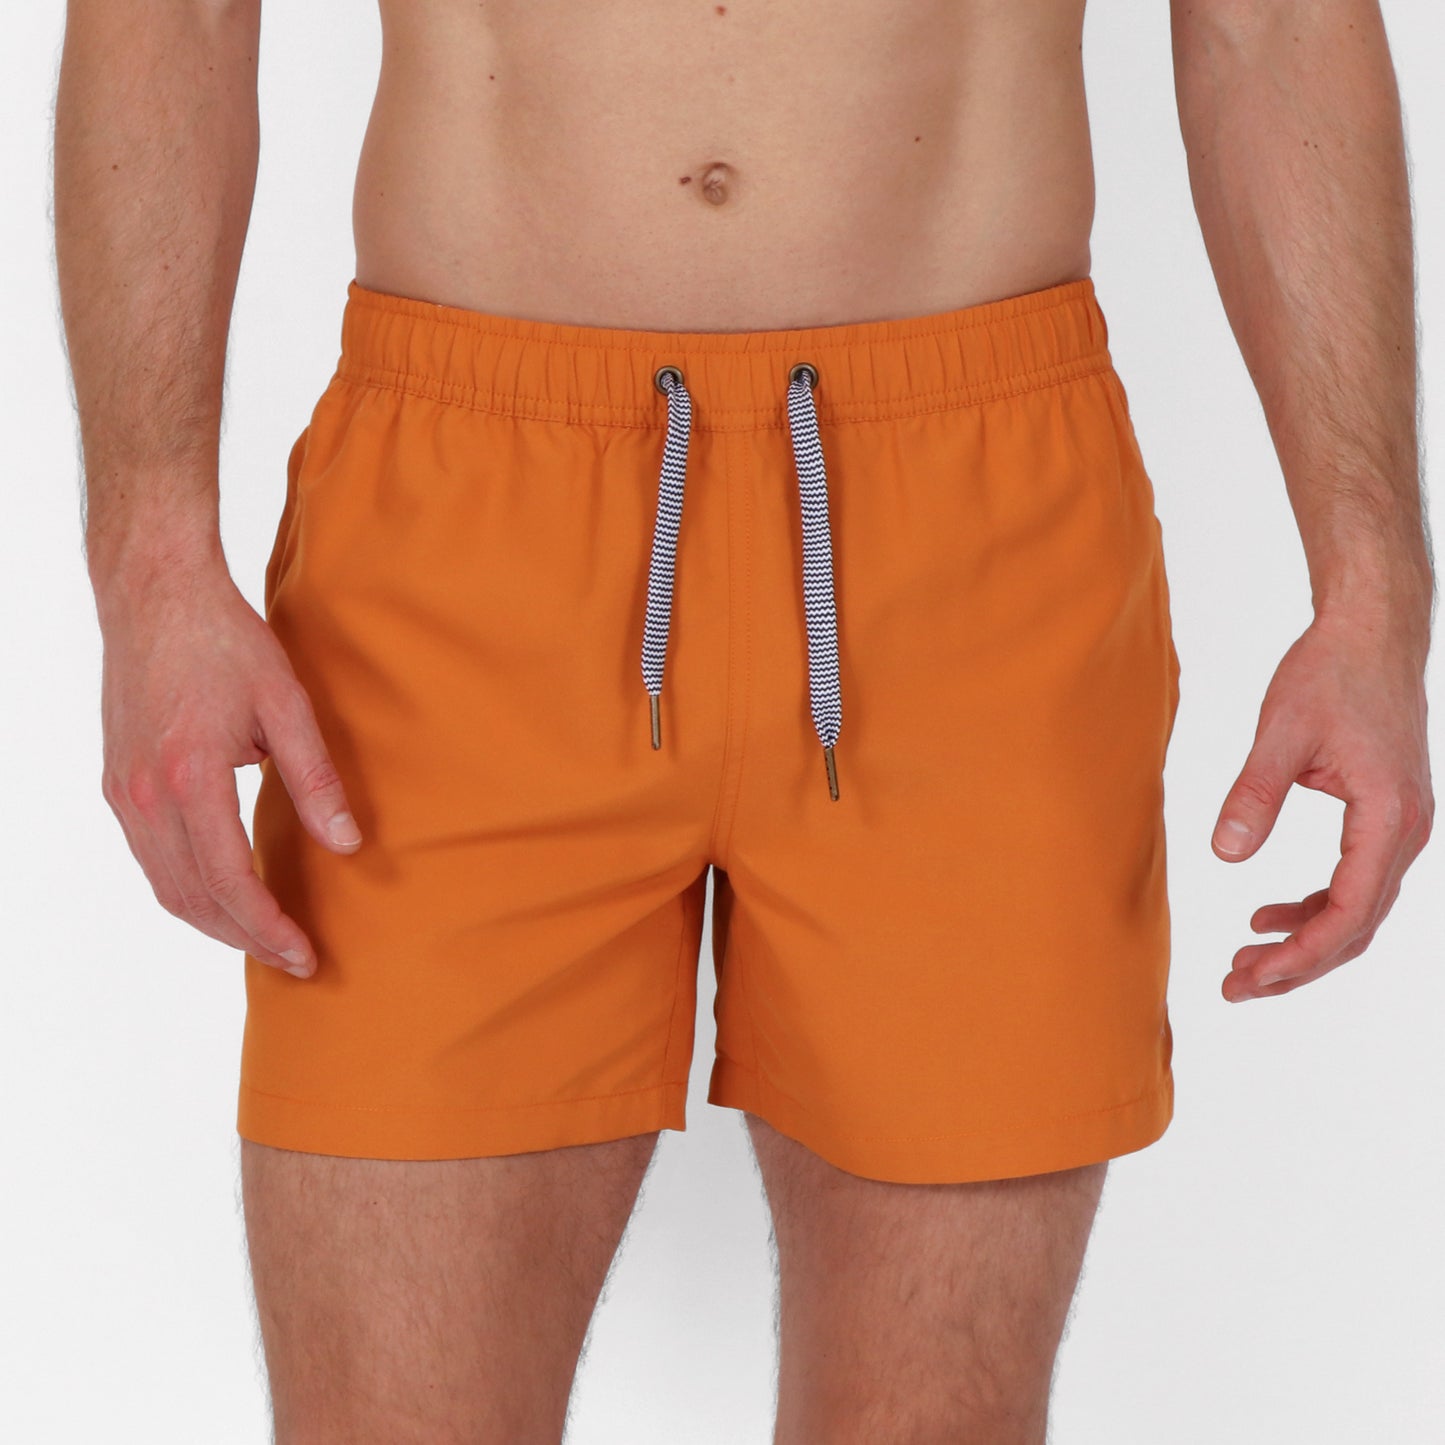 Original Weekend Sustainable Men's Swim Short in Amber Ale Orange on Body Front View